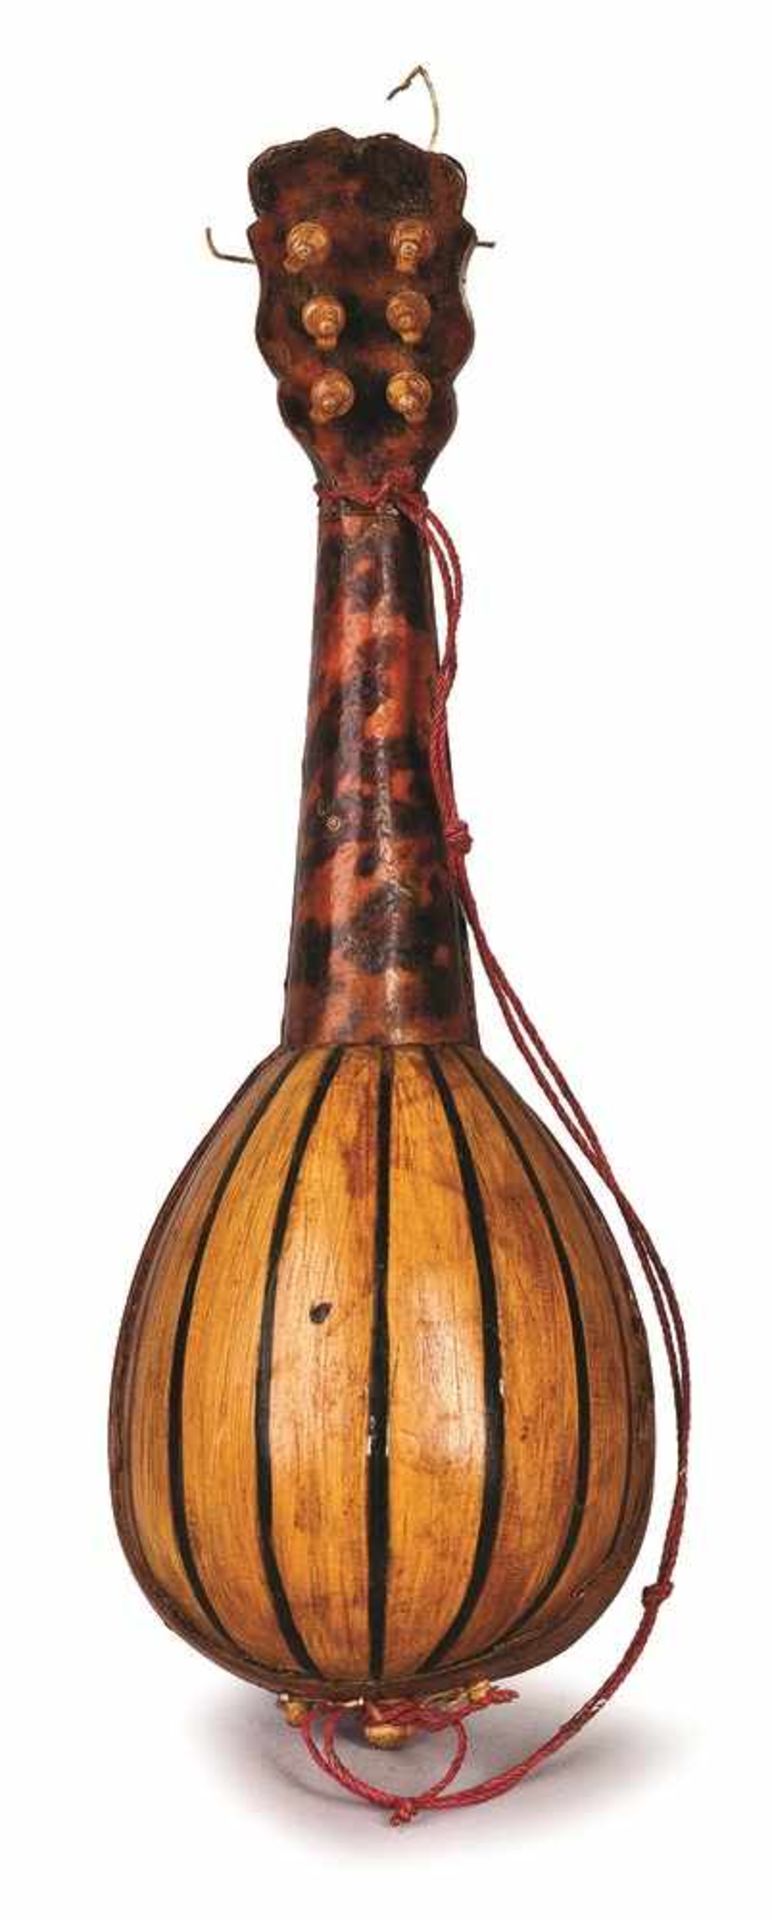 MANDOLINO IN LEGNO POLICROMO | POLYPHONIC WOODEN MANDOLIN Mandolino in legno policromo, - Image 3 of 3